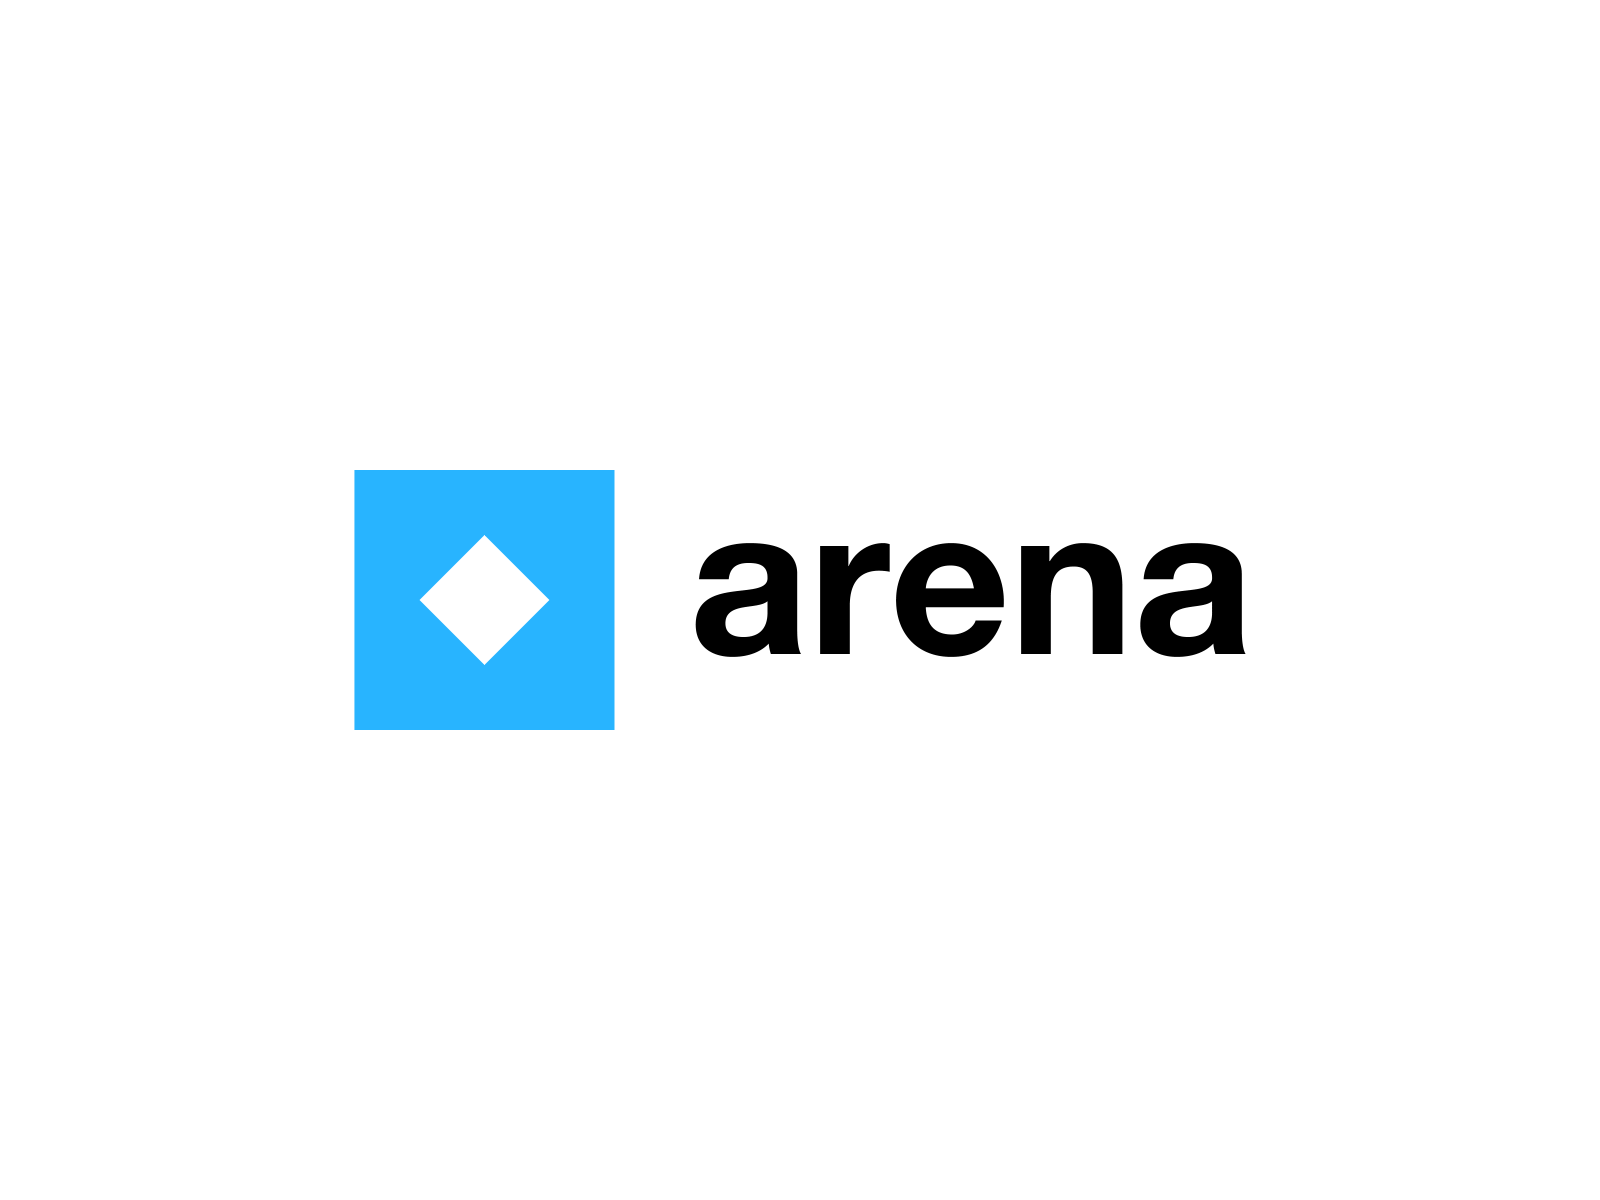 arena branding diamond logo design simple shapes square